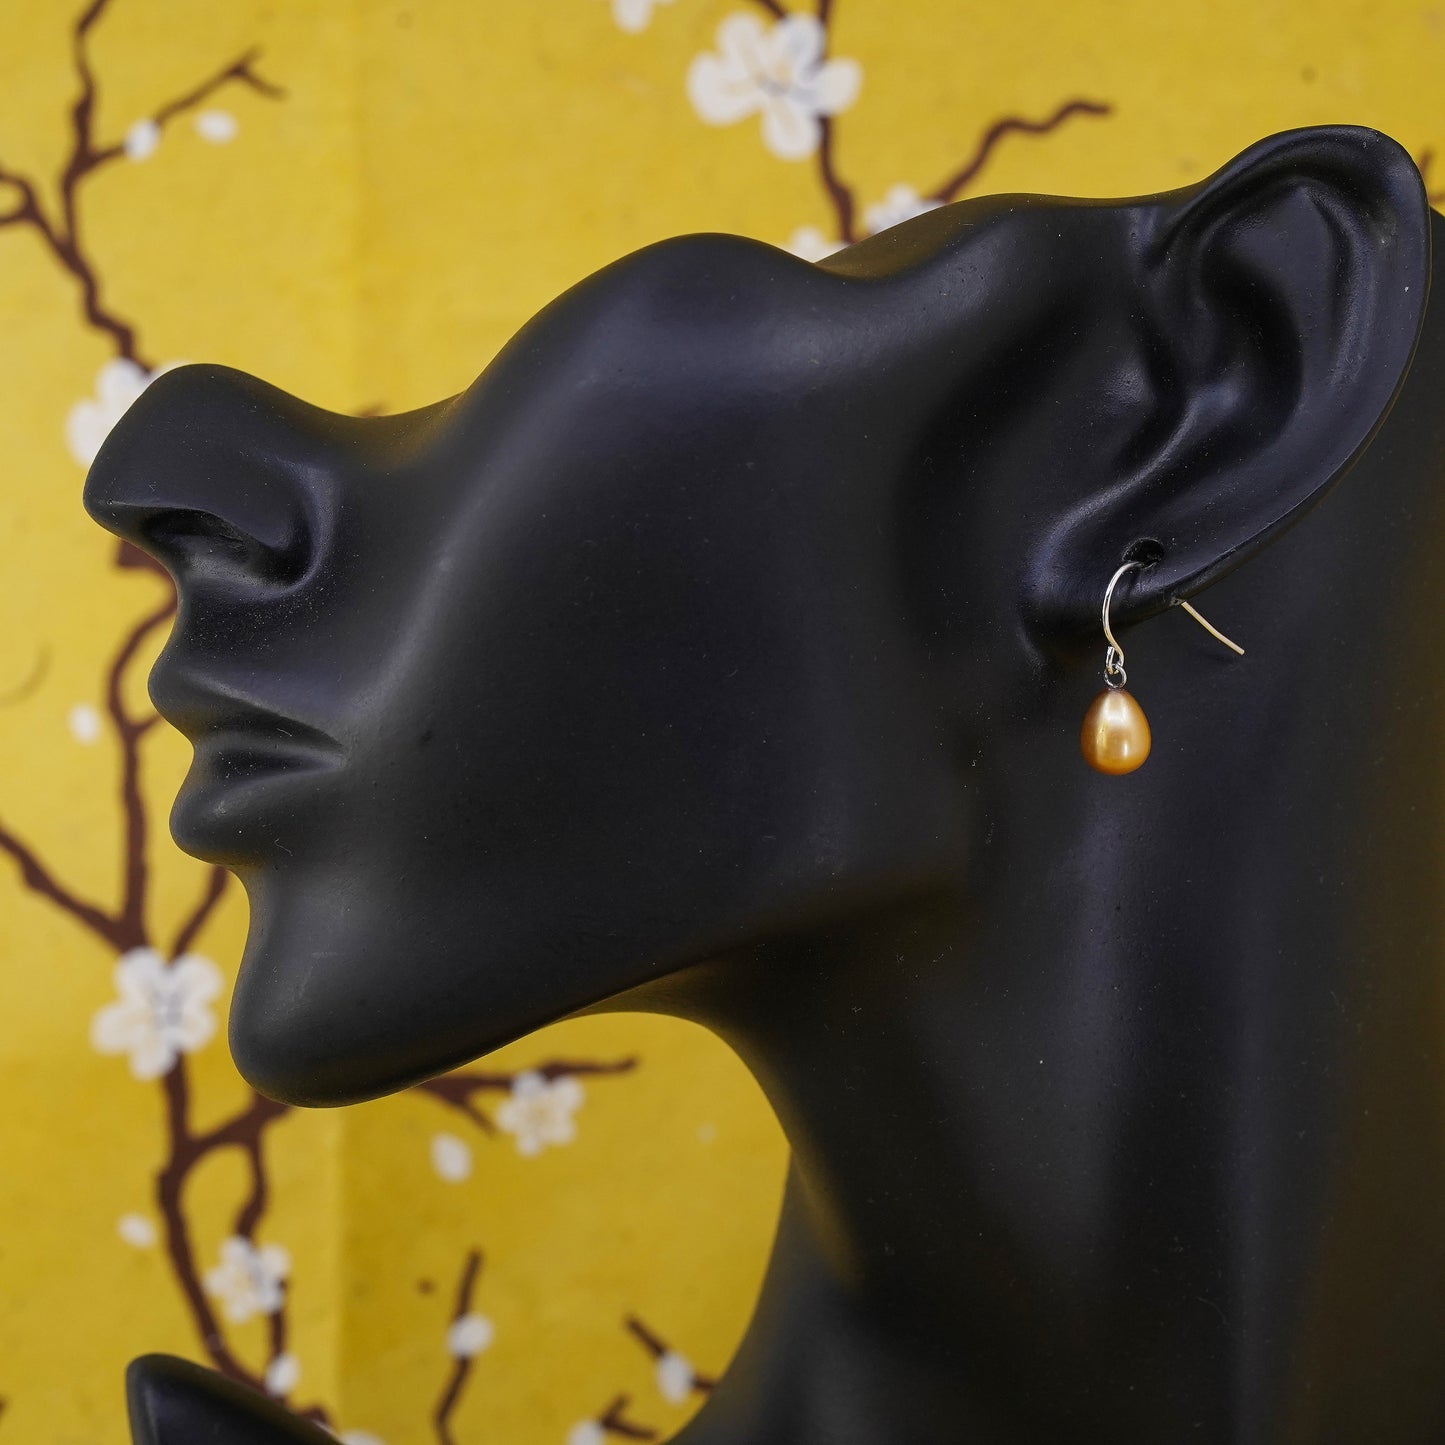 Vintage Sterling silver handmade earrings, 925 hooks with golden pearl drops